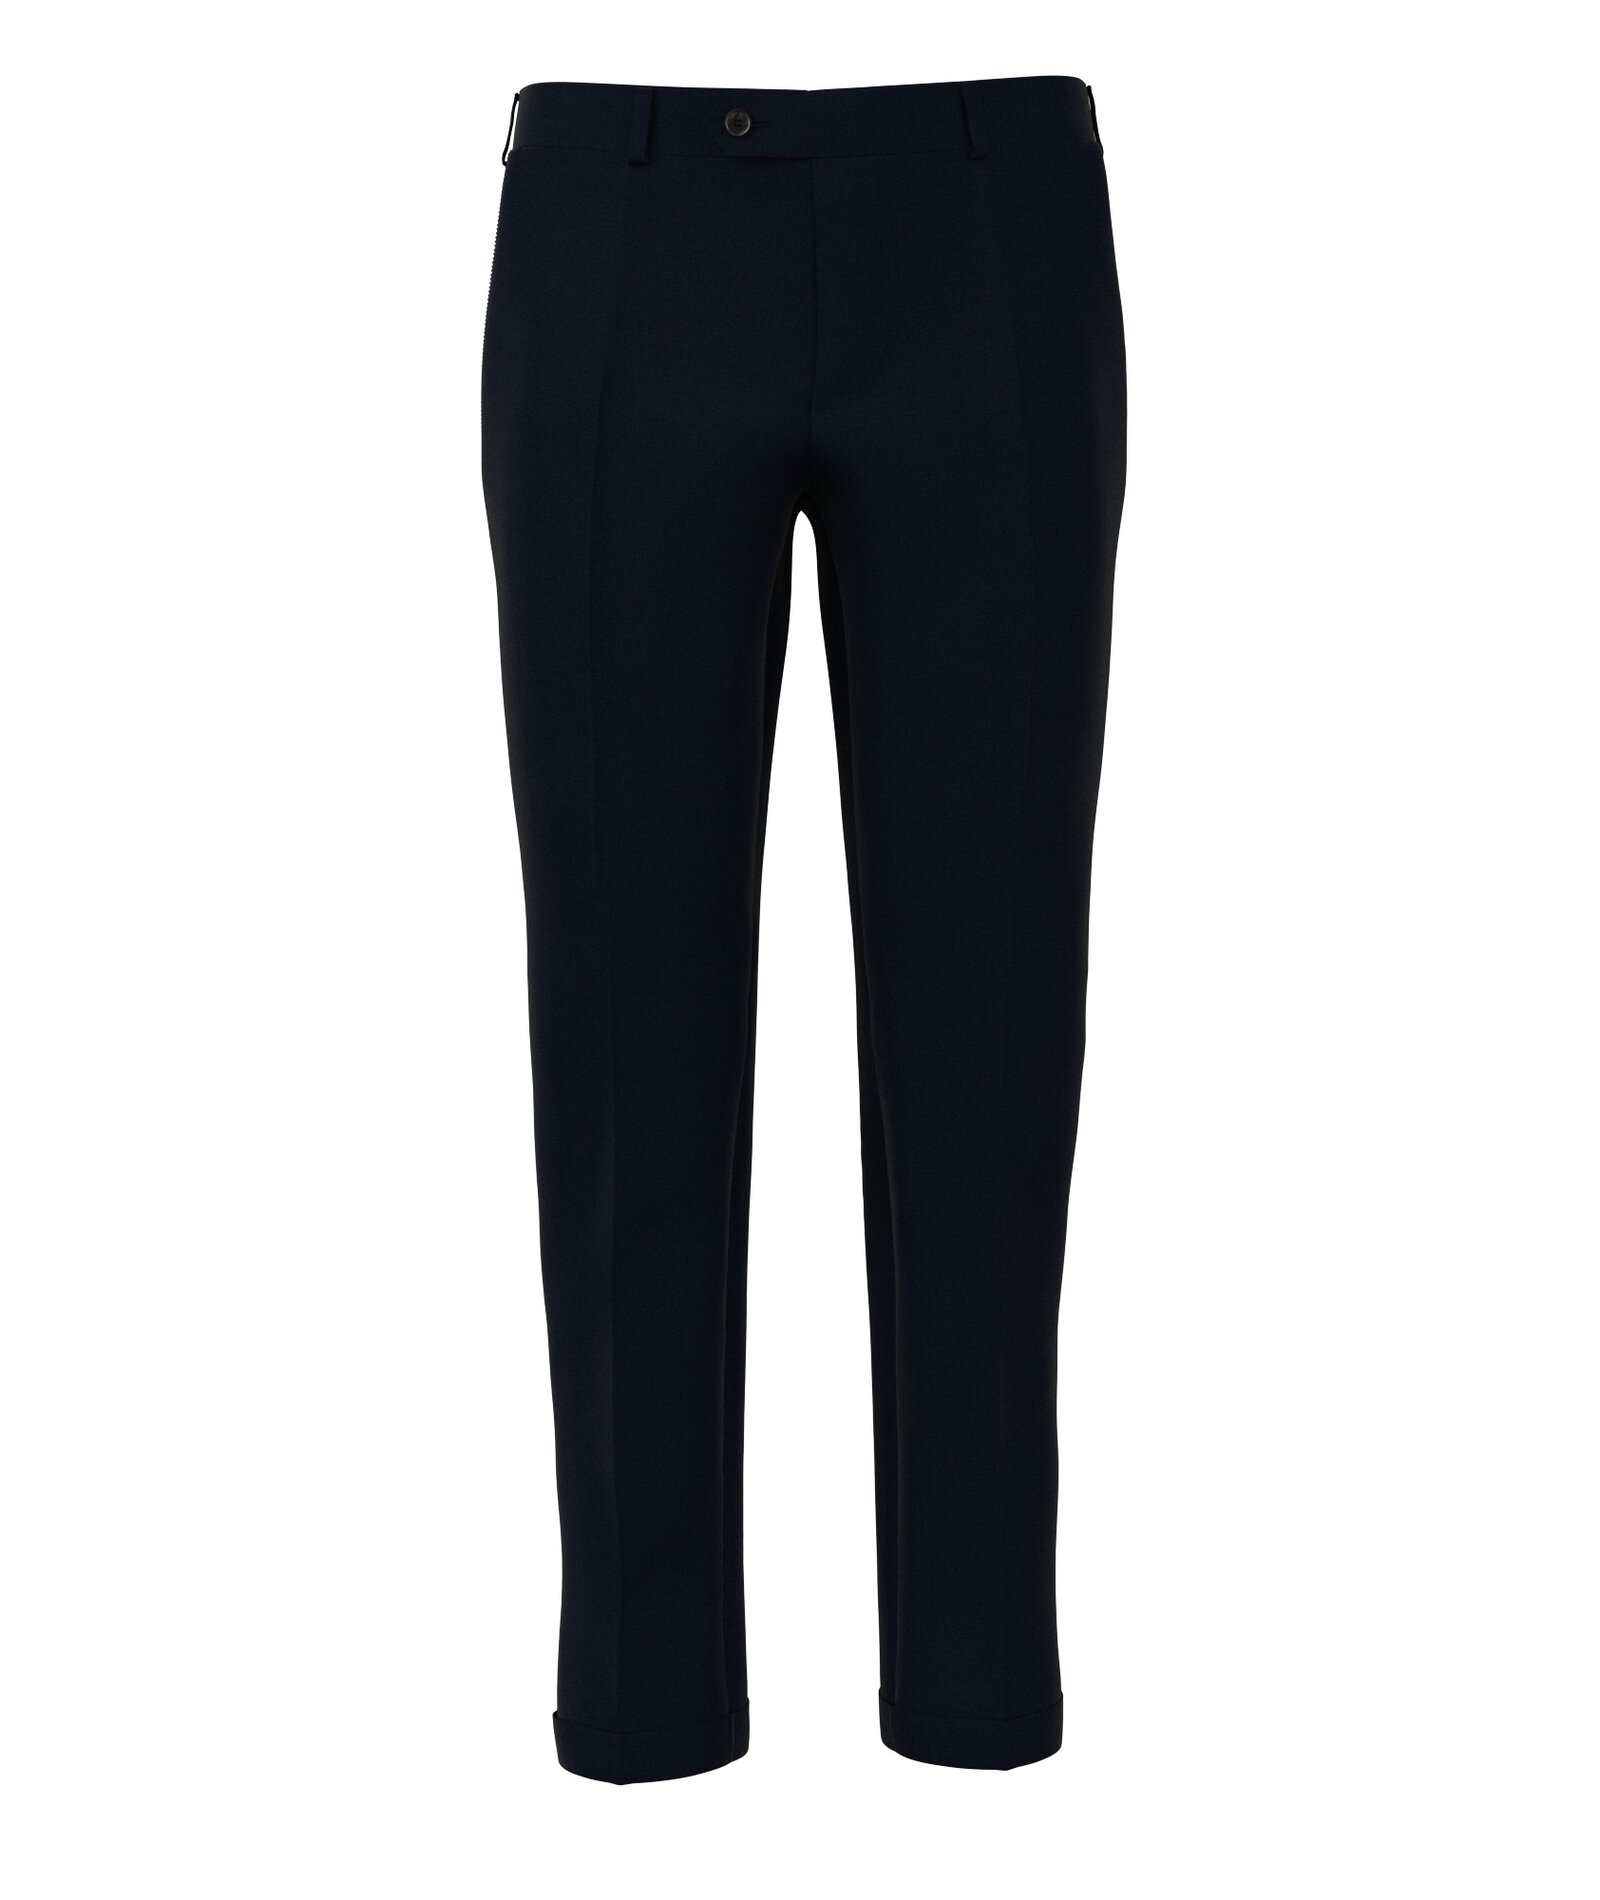 Image of Pantaloni da uomo su misura, Lanificio Zignone, Blu Crêpe, Quattro Stagioni | Lanieri